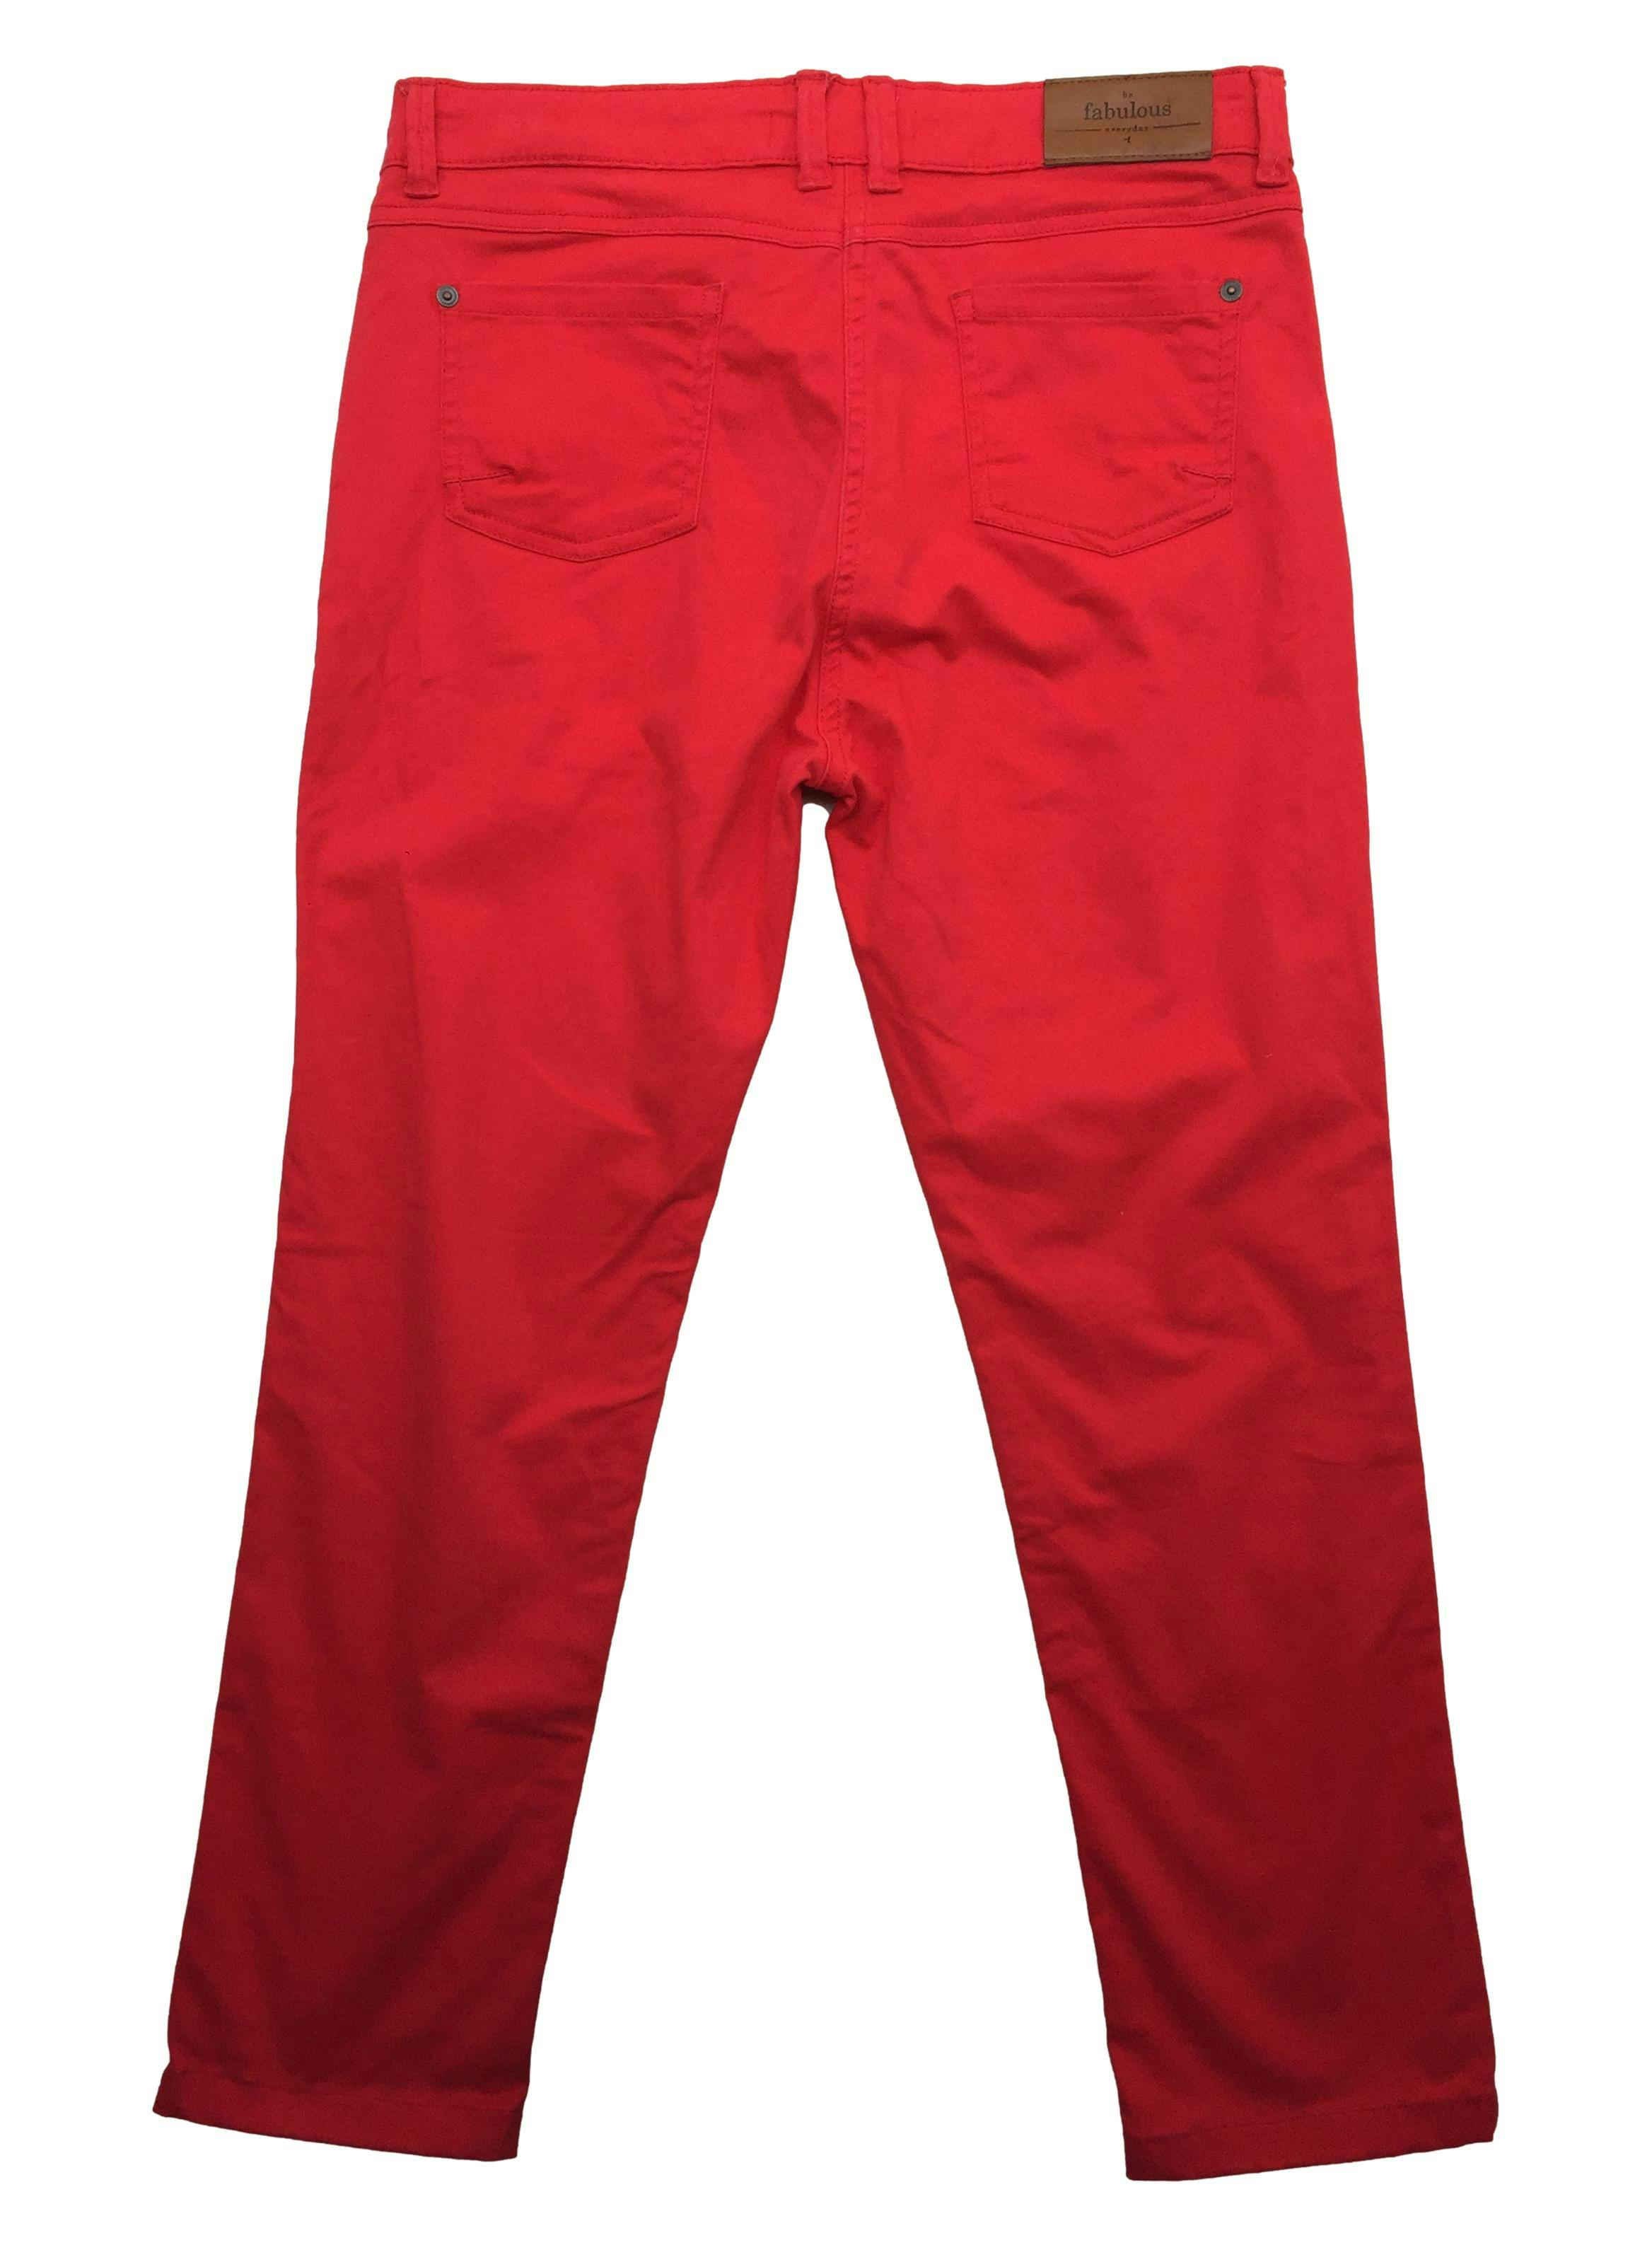 Pantalon rojo Topitop 98% algodon stretch, corte slim. CIntura 80cm Tiro 25cm Largo 90cm